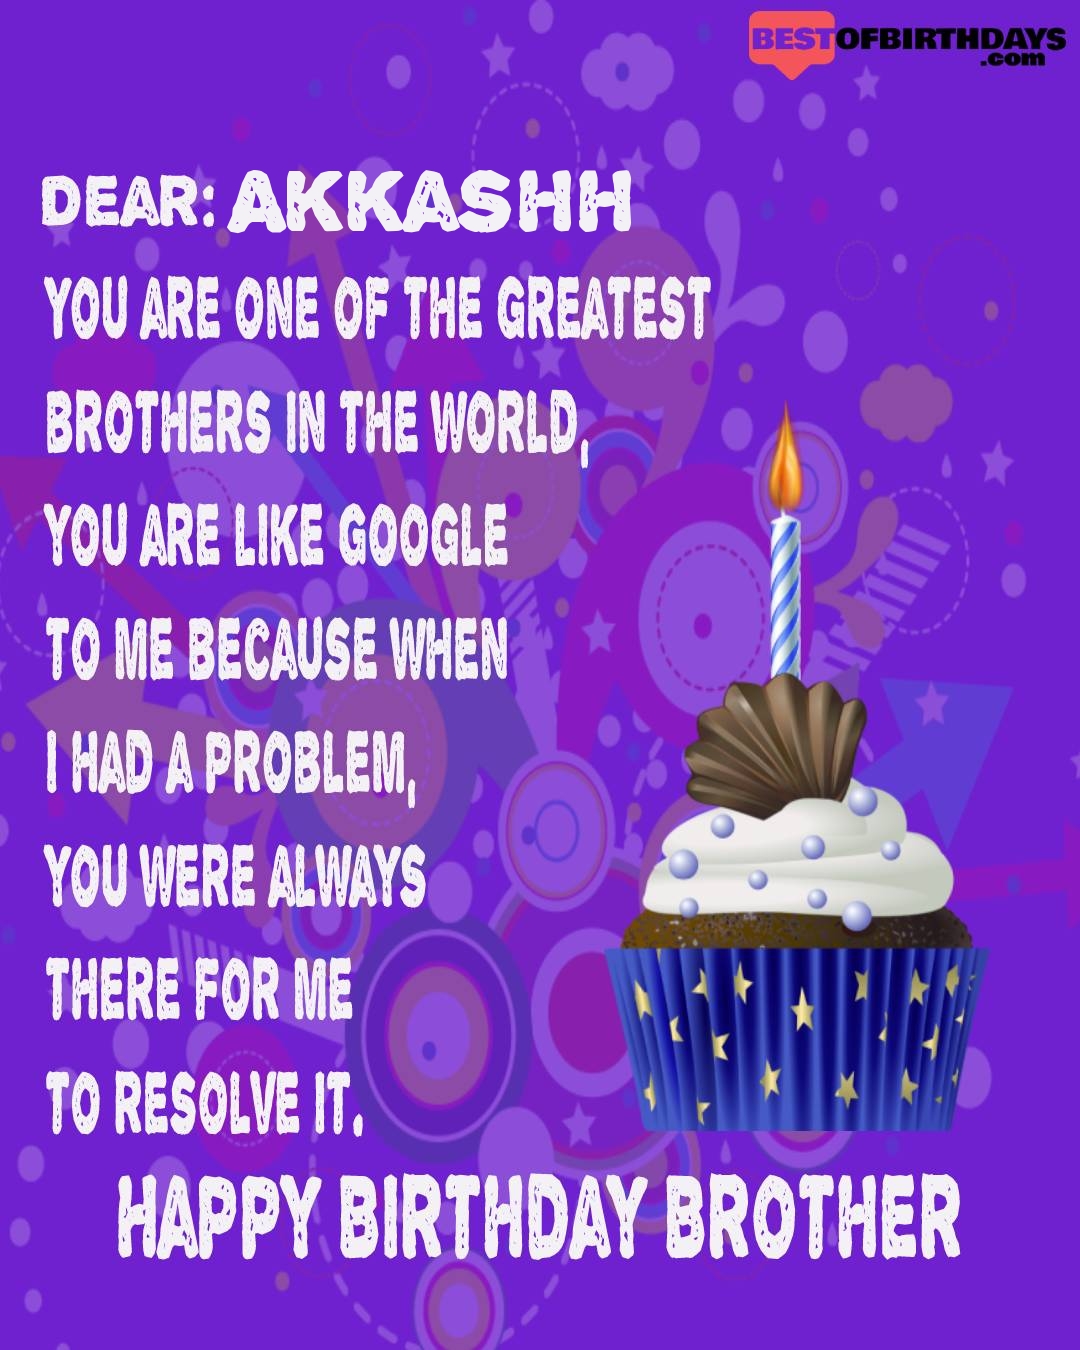 Happy birthday akkashh bhai brother bro